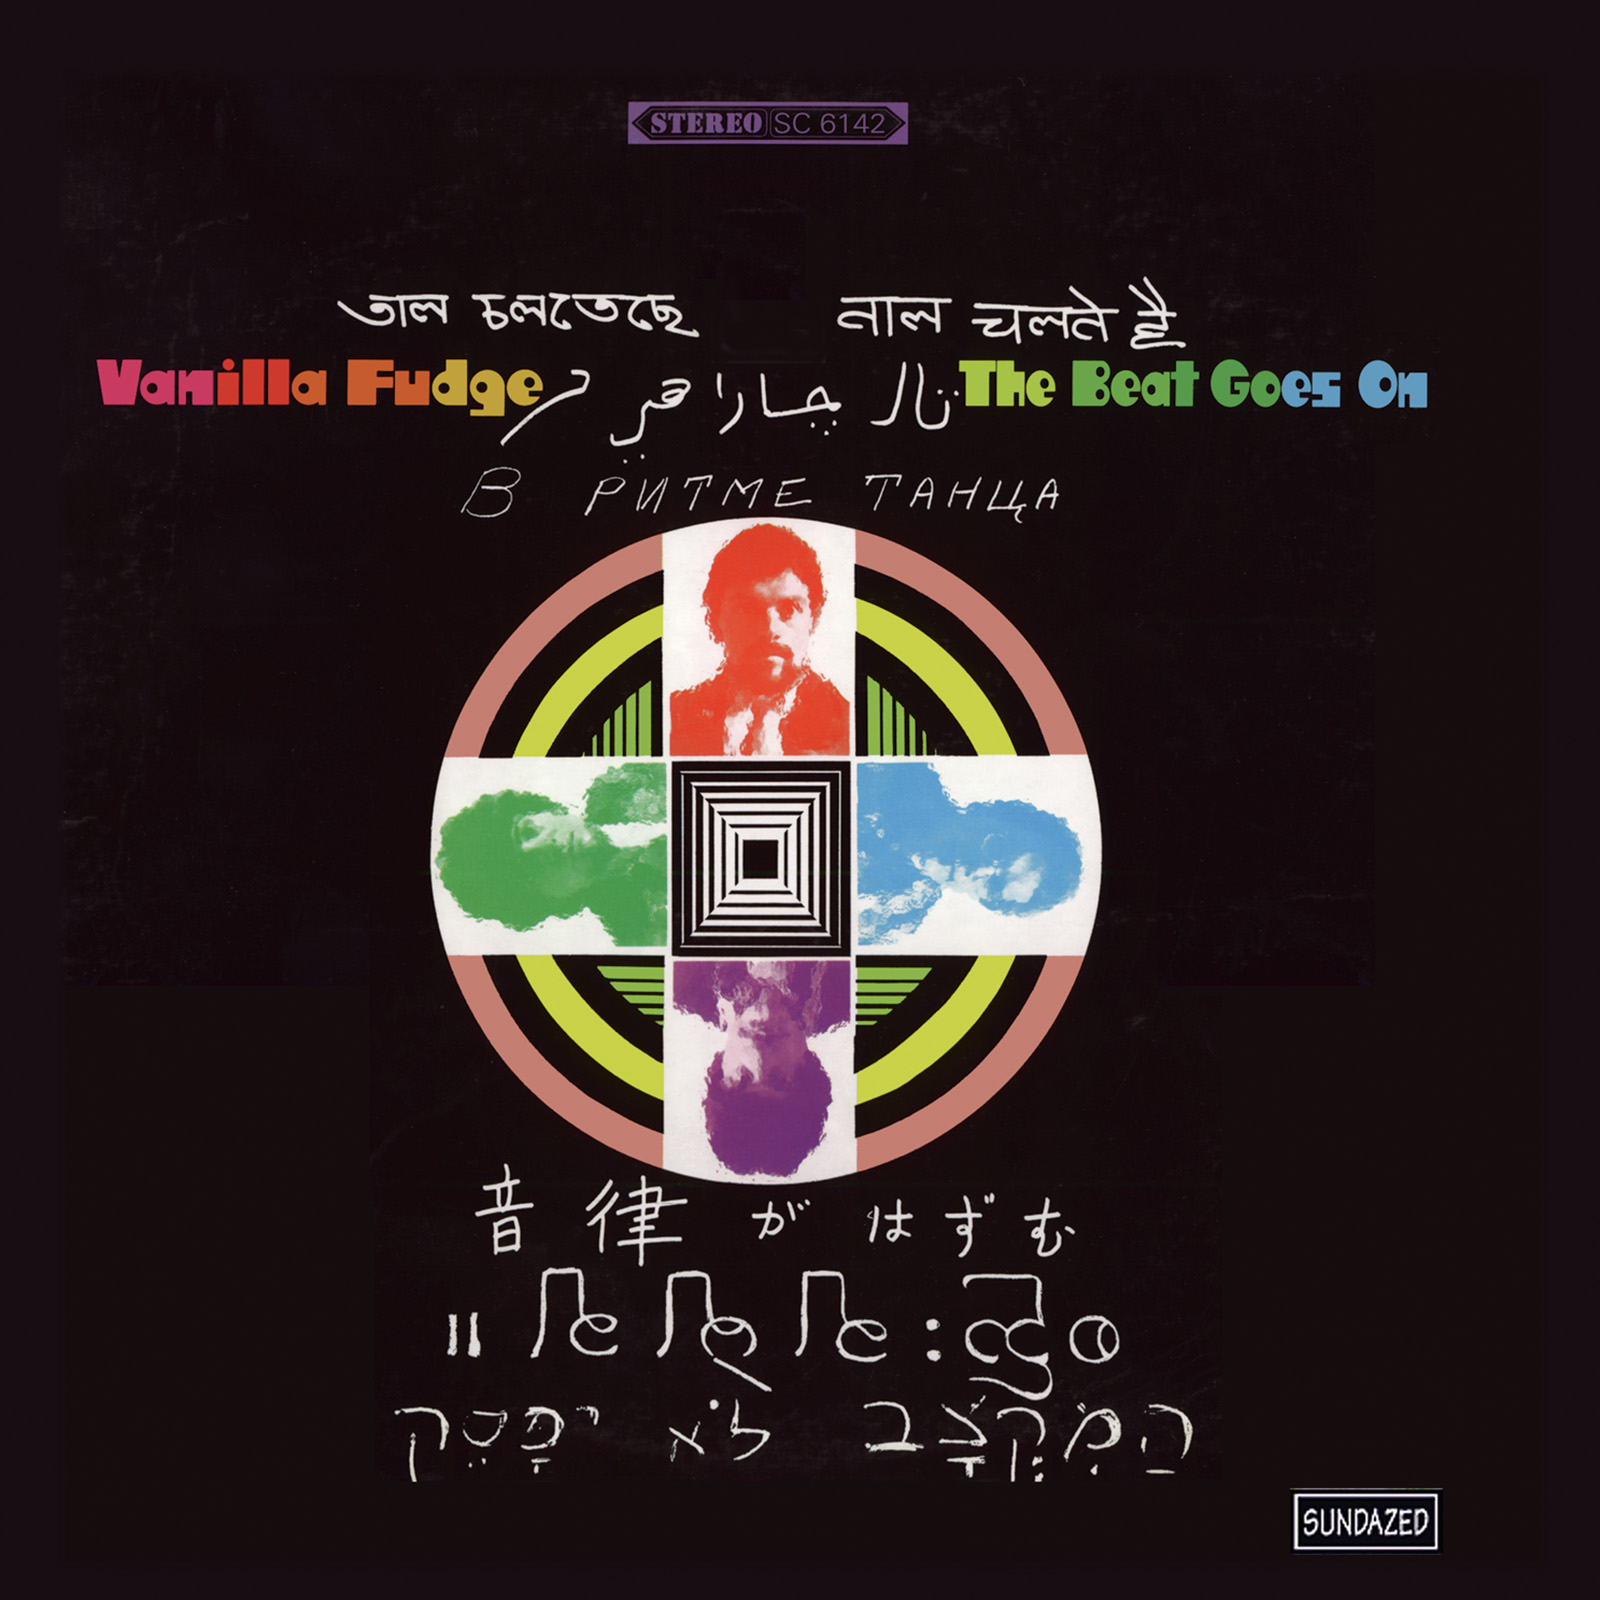 Vanilla Fudge - The Beat Goes On CD - $5 New Old Stock - 